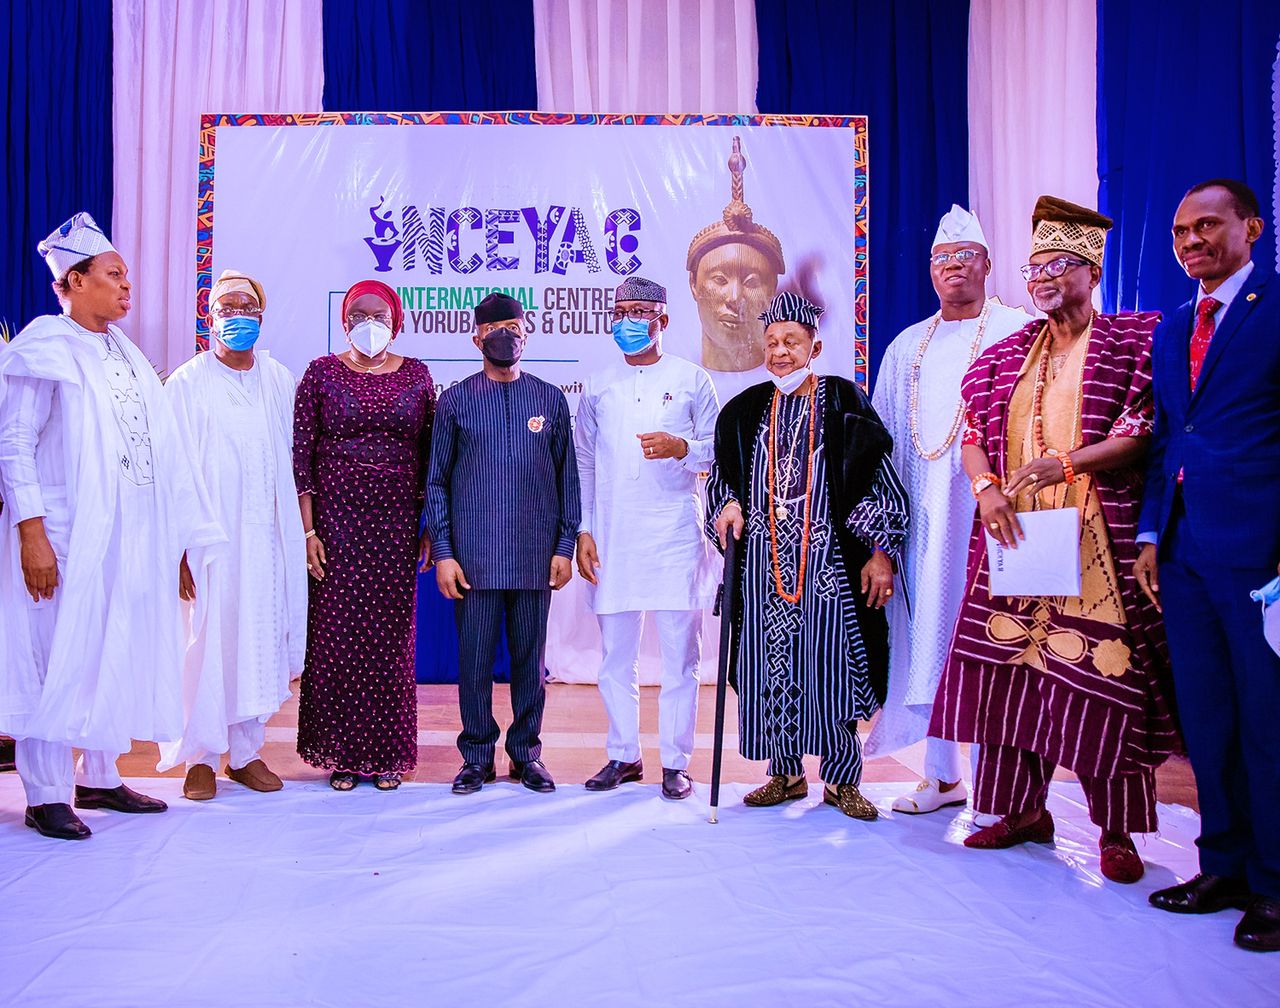 VP Osinbajo Attends The Presentation And Launch Of Yoruba World Centre In Ibadan, Oyo State On 23/11/2021